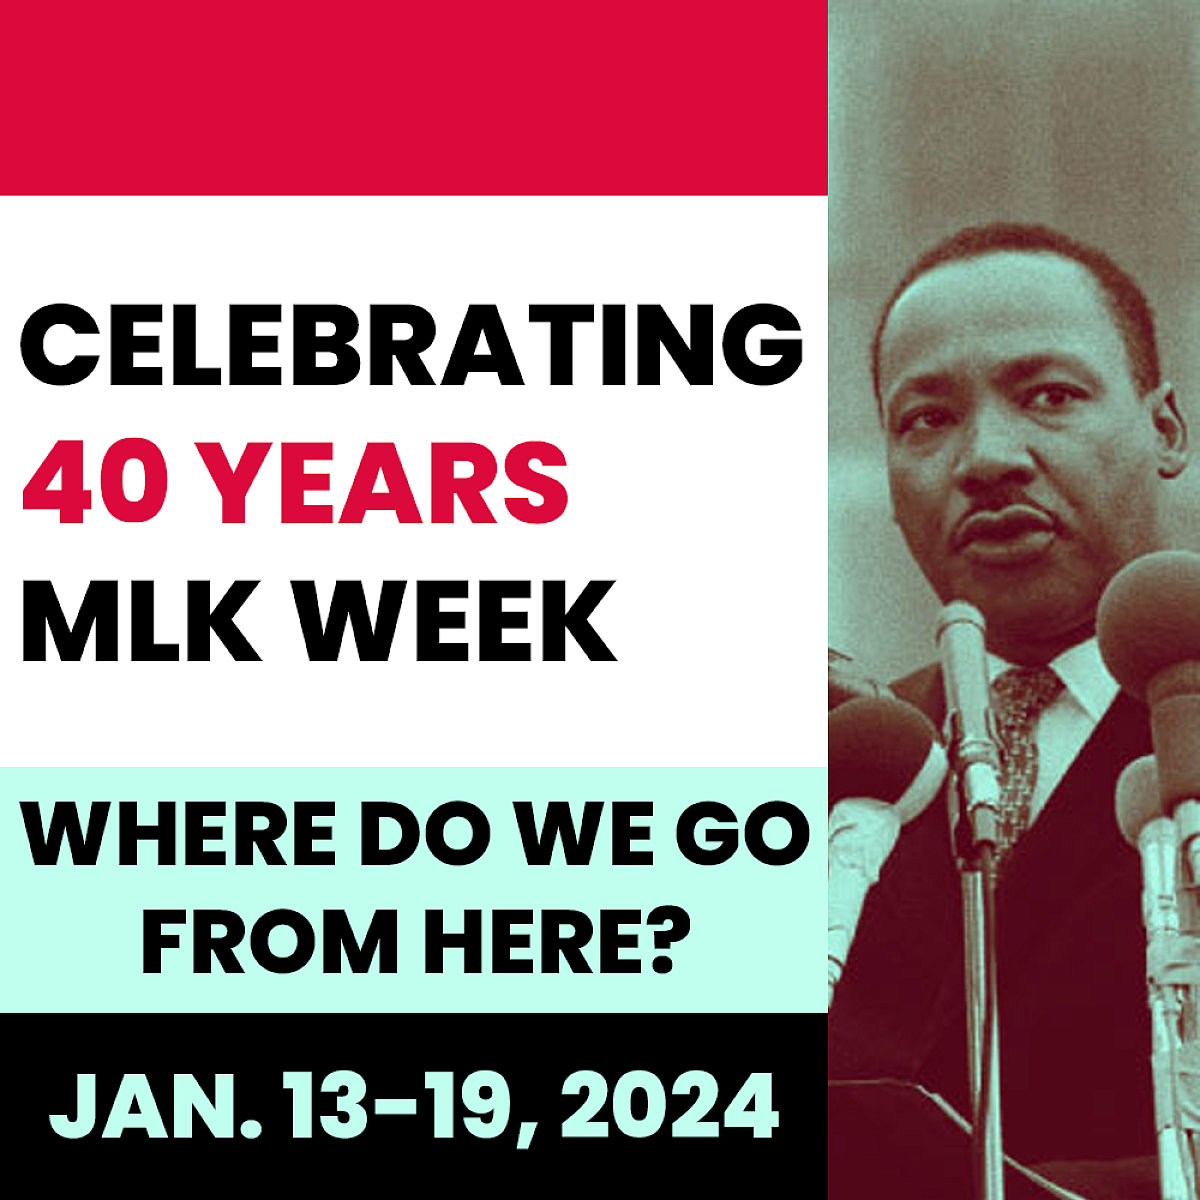 Image of Martin Luther King Jr. for MLK week